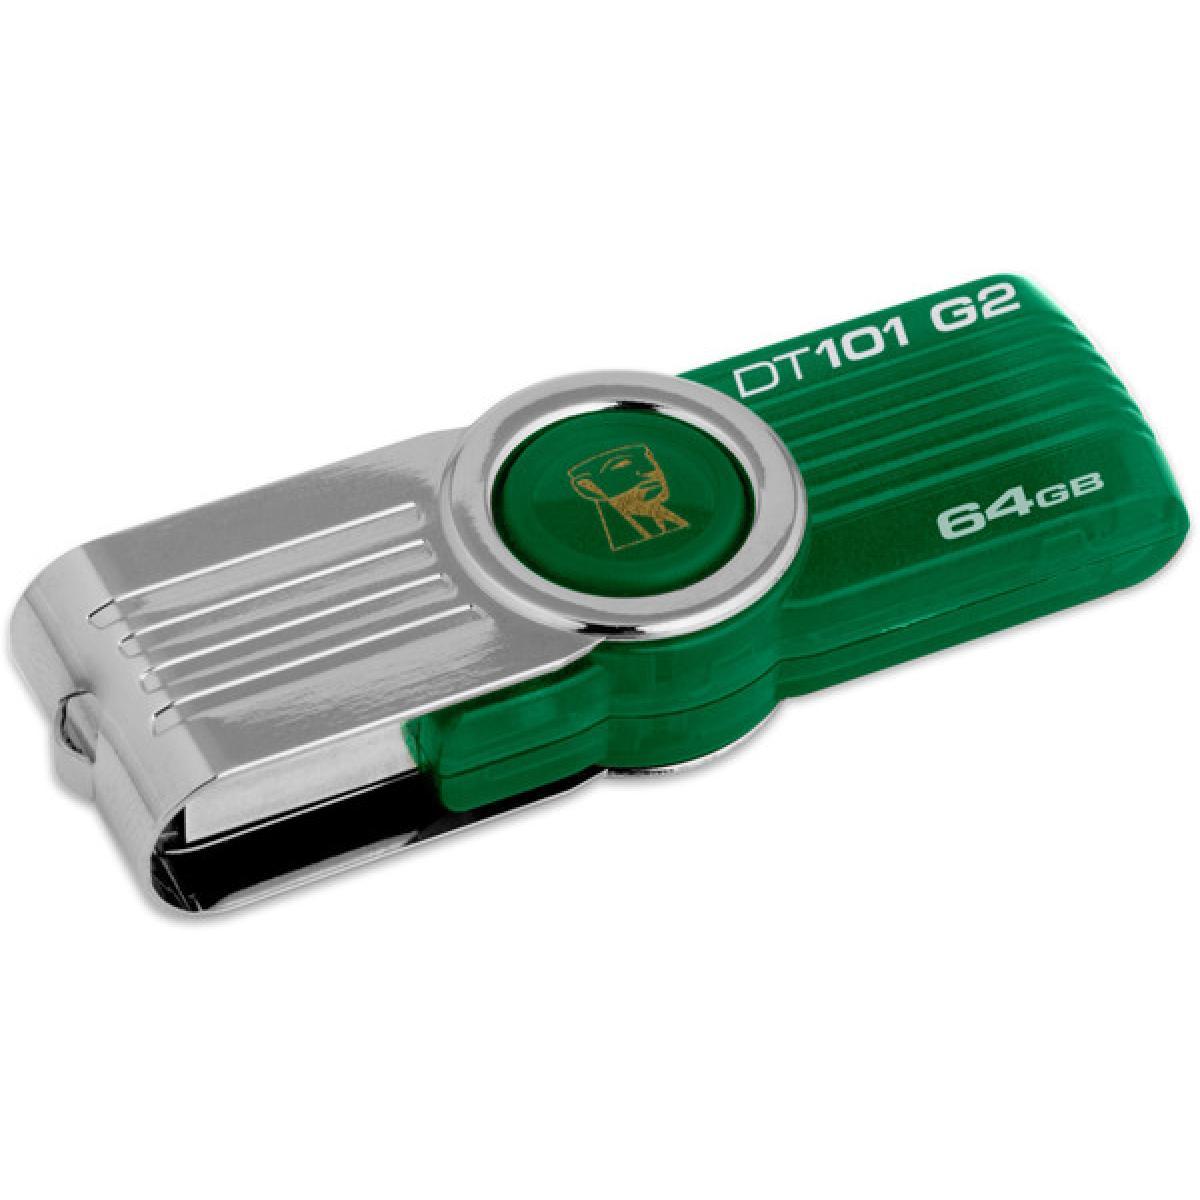 USB 2.0 Flash Drive 64Gb Kingston DataTraveler 101 G2, 480 Мбит/сек, Зелёный